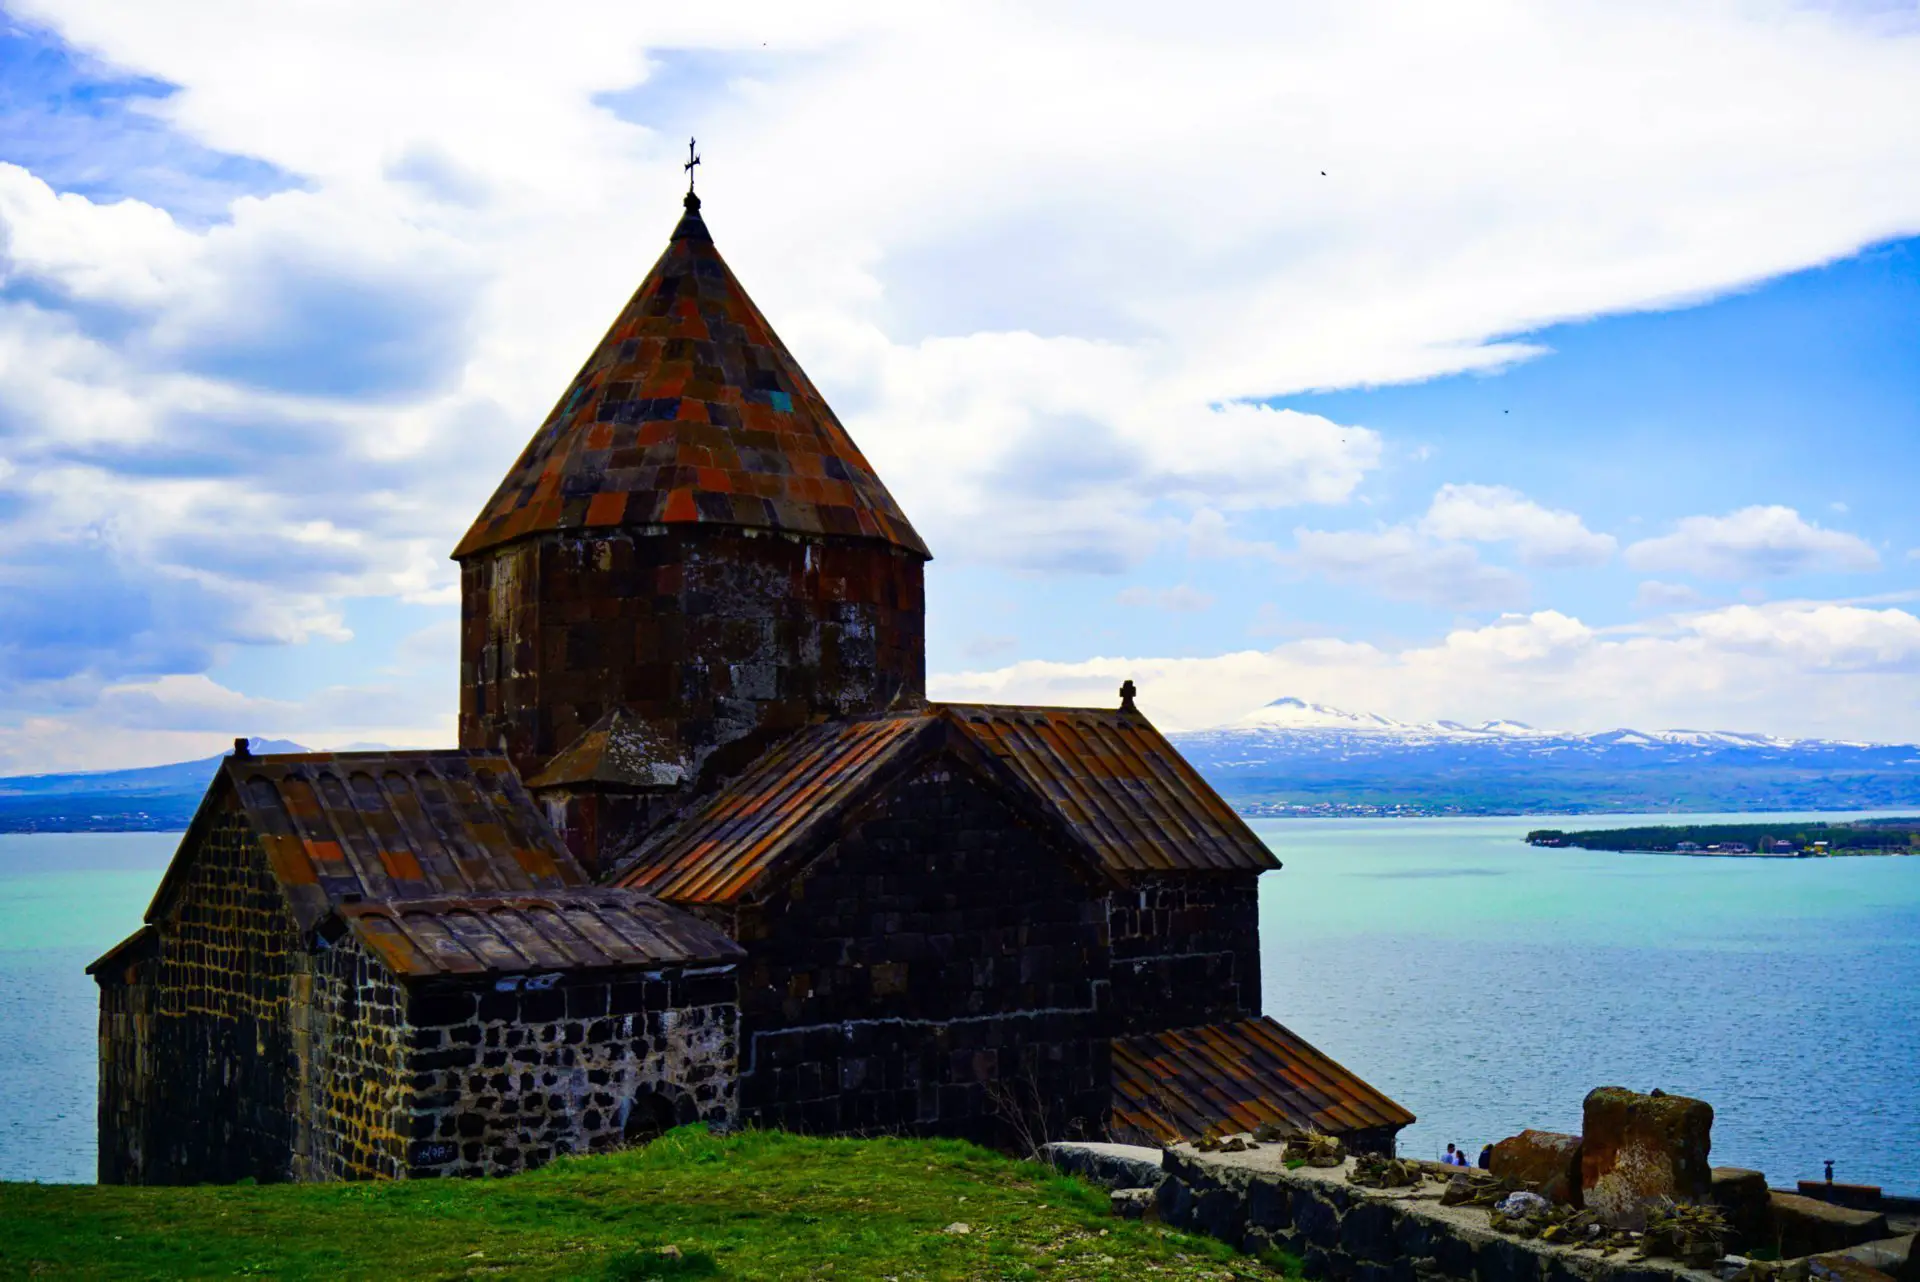 Sevanavank, Armenia - Experiencing the Globe